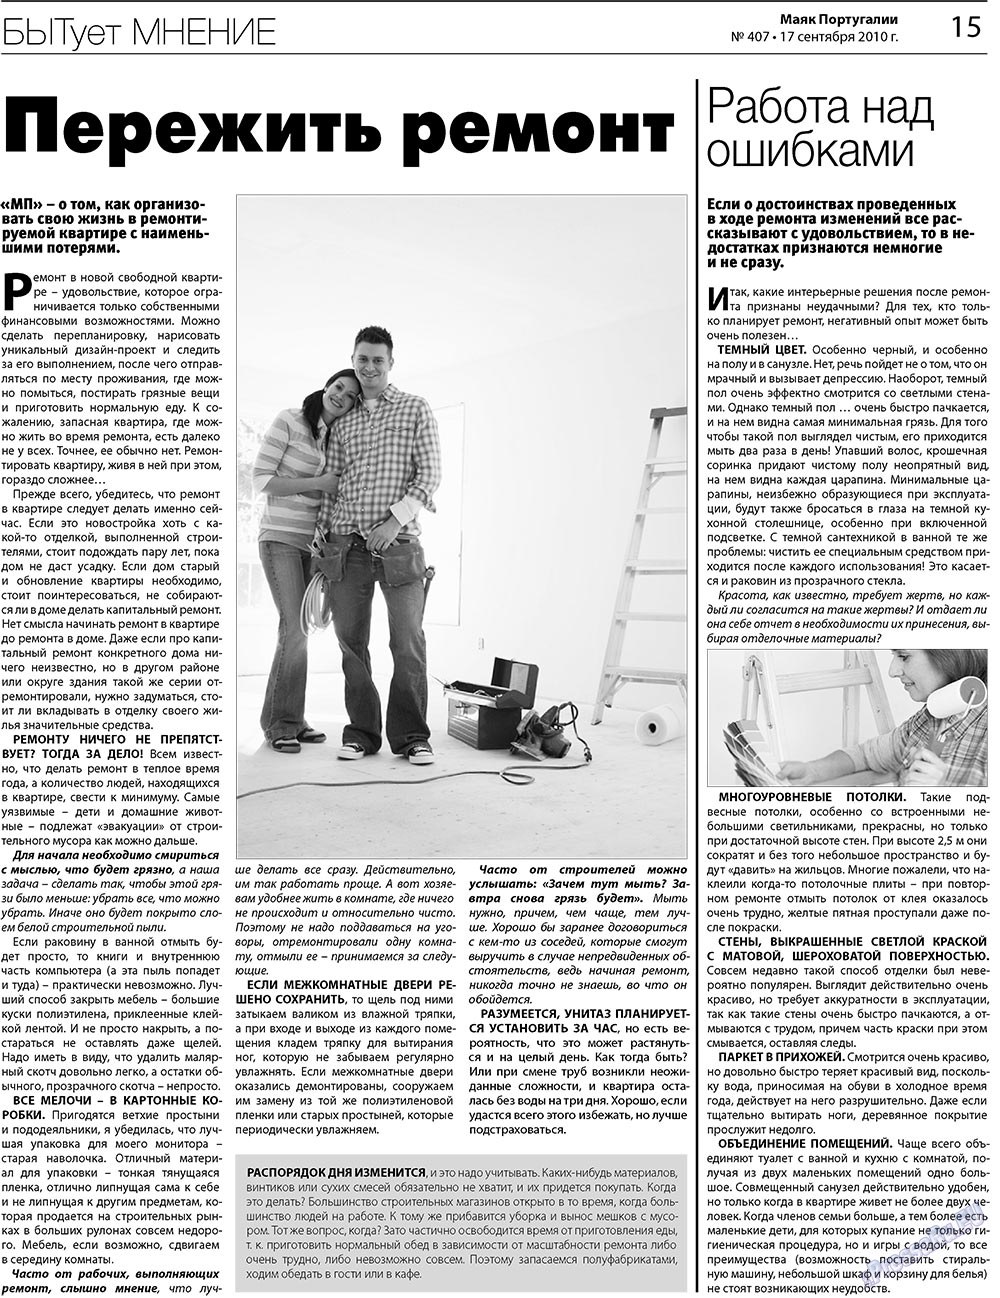 Маяк Португалии, газета. 2010 №407 стр.15